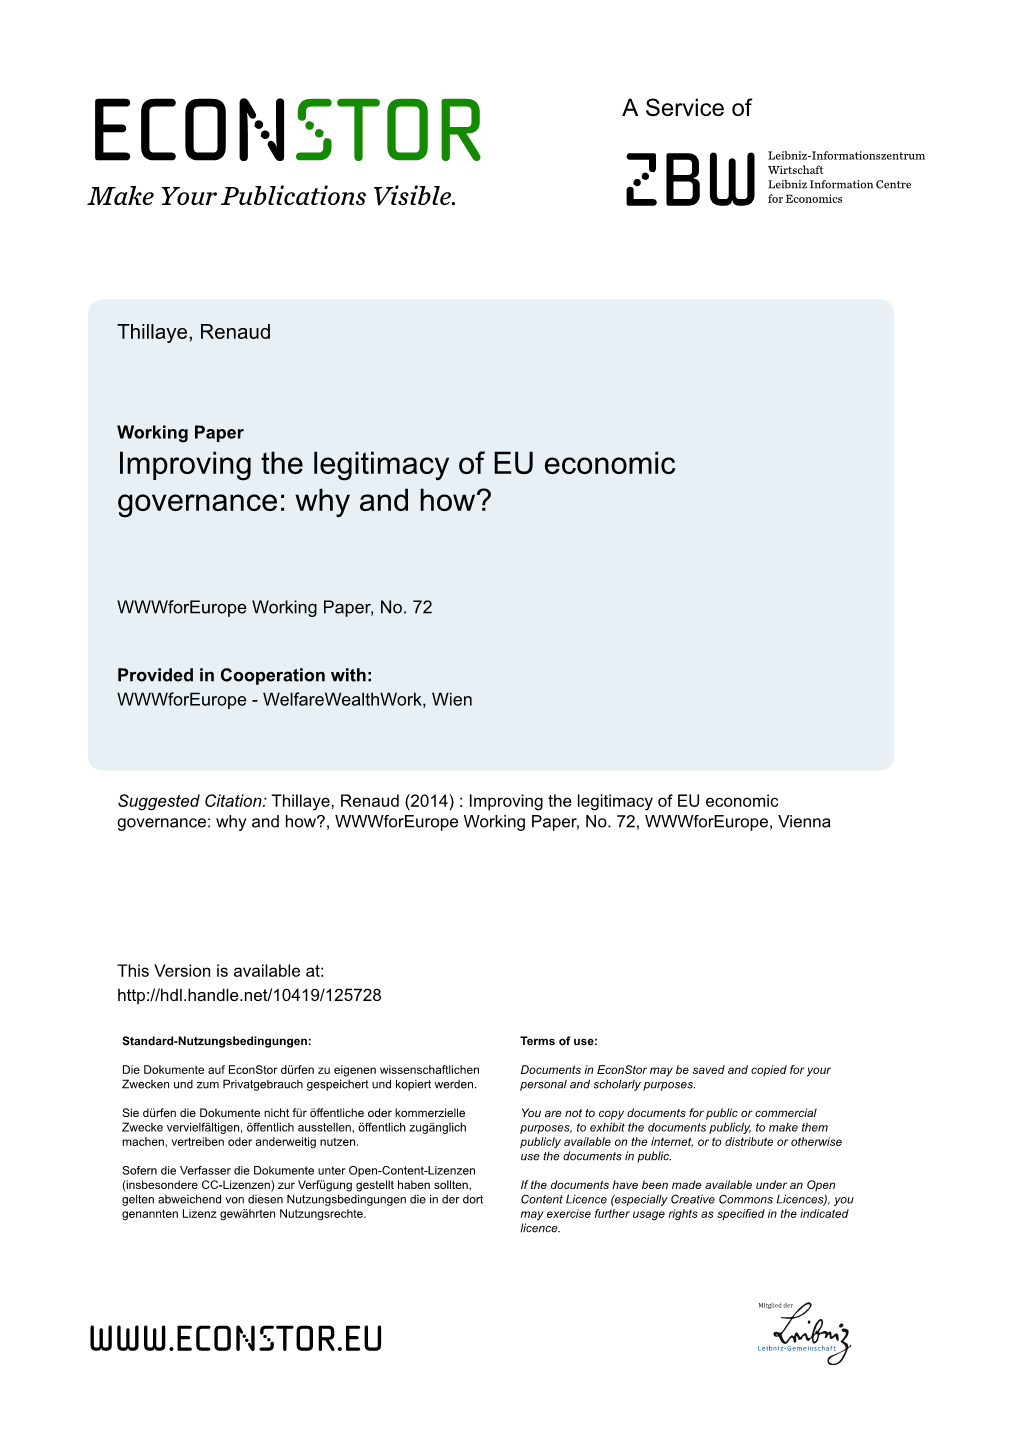 Improving the Legitimacy of EU Economic Governance: Why and How?